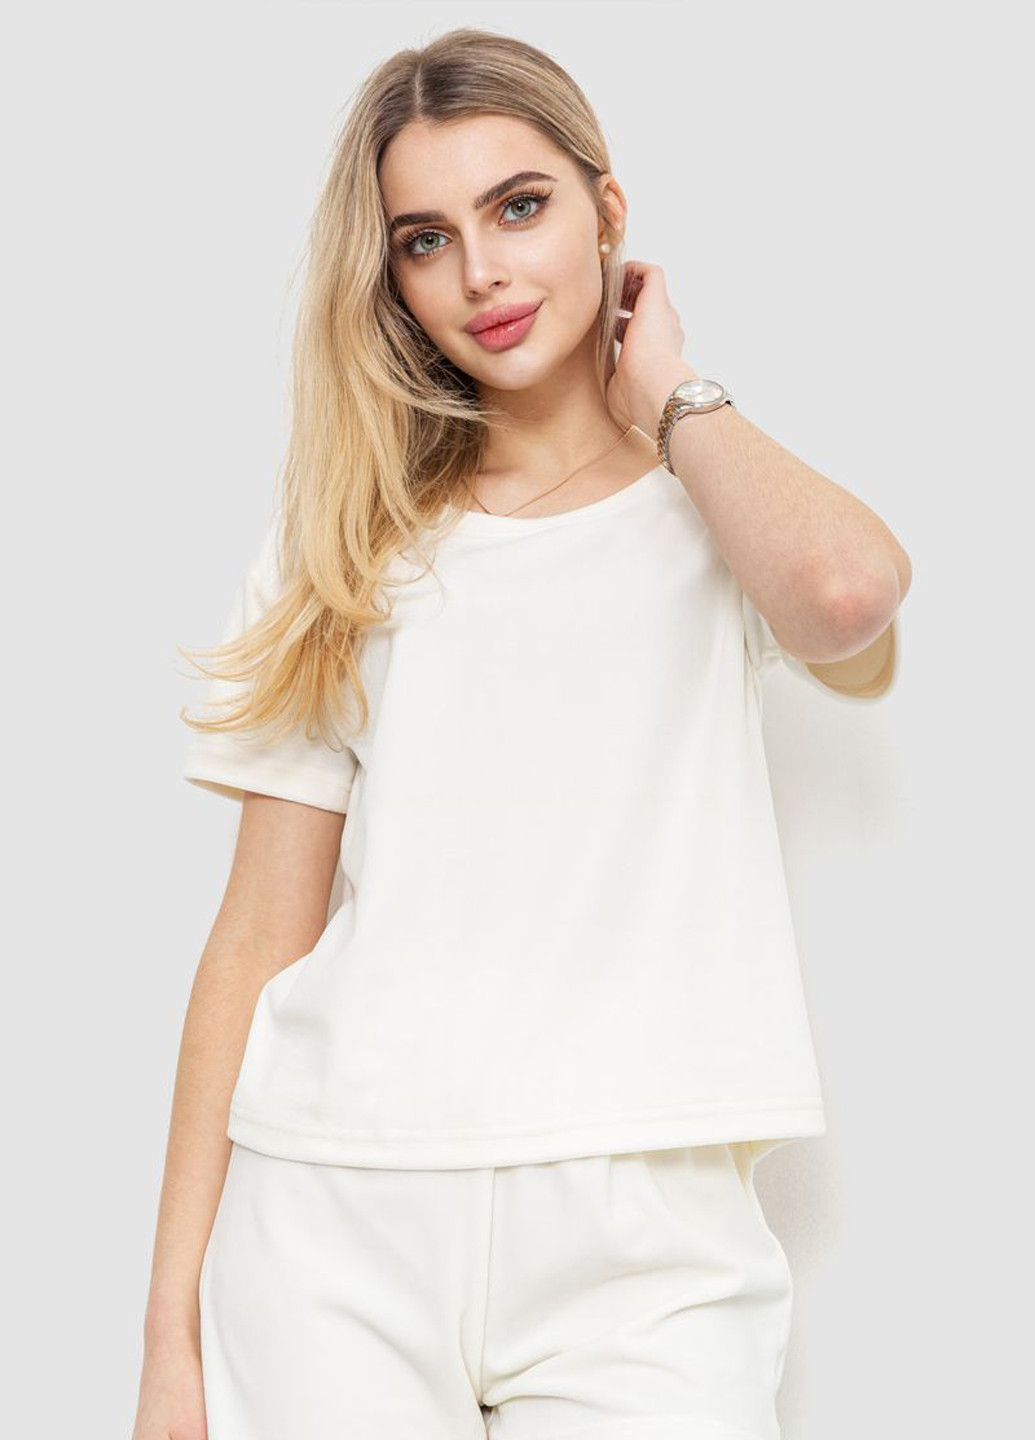 Молочная всесезон пижама (футболка, шорты) футболка + шорты Ager